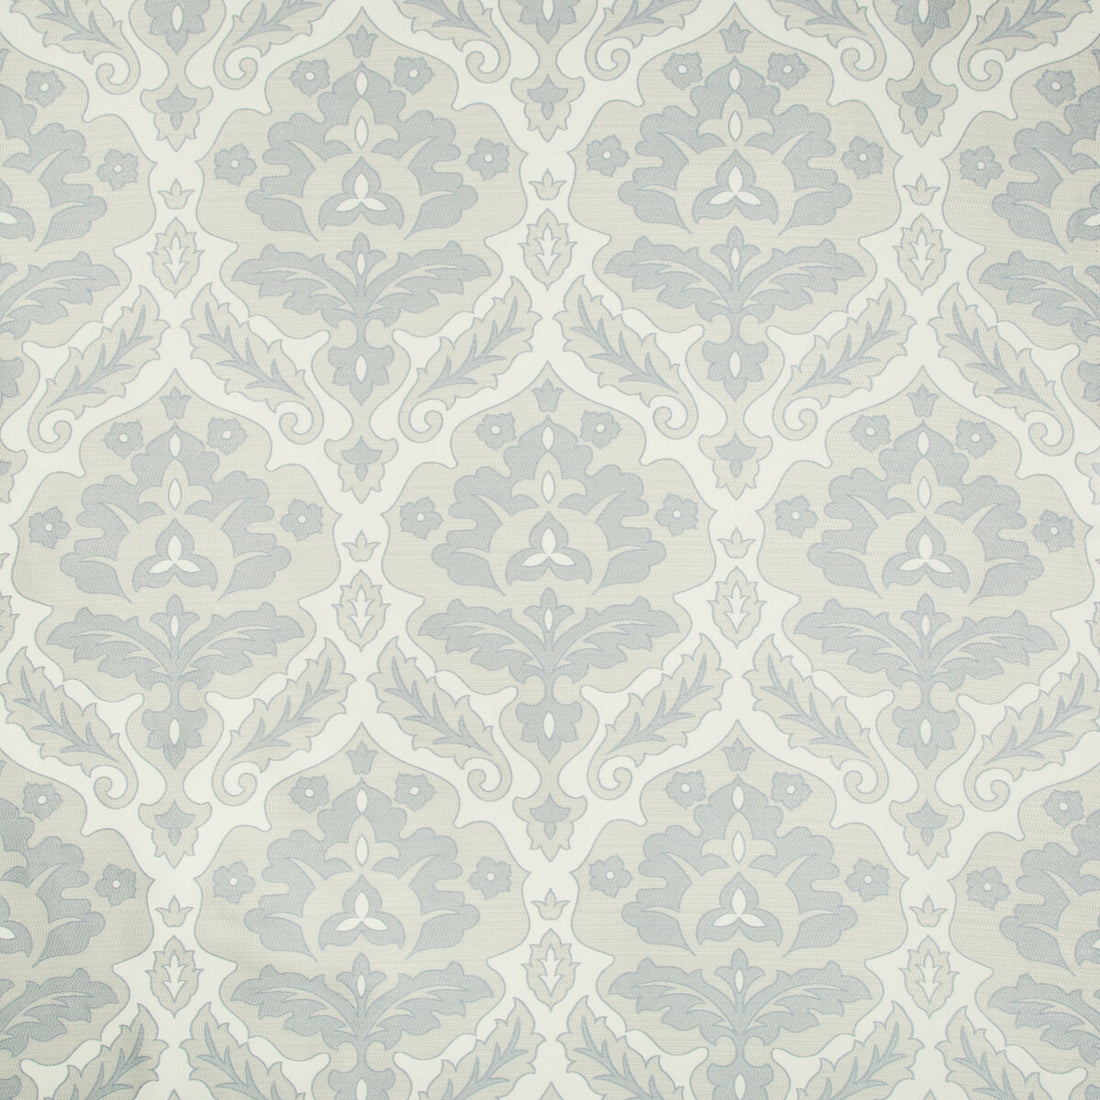 Kravet Design fabric in 34719-115 color - pattern 34719.115.0 - by Kravet Design in the Gis collection